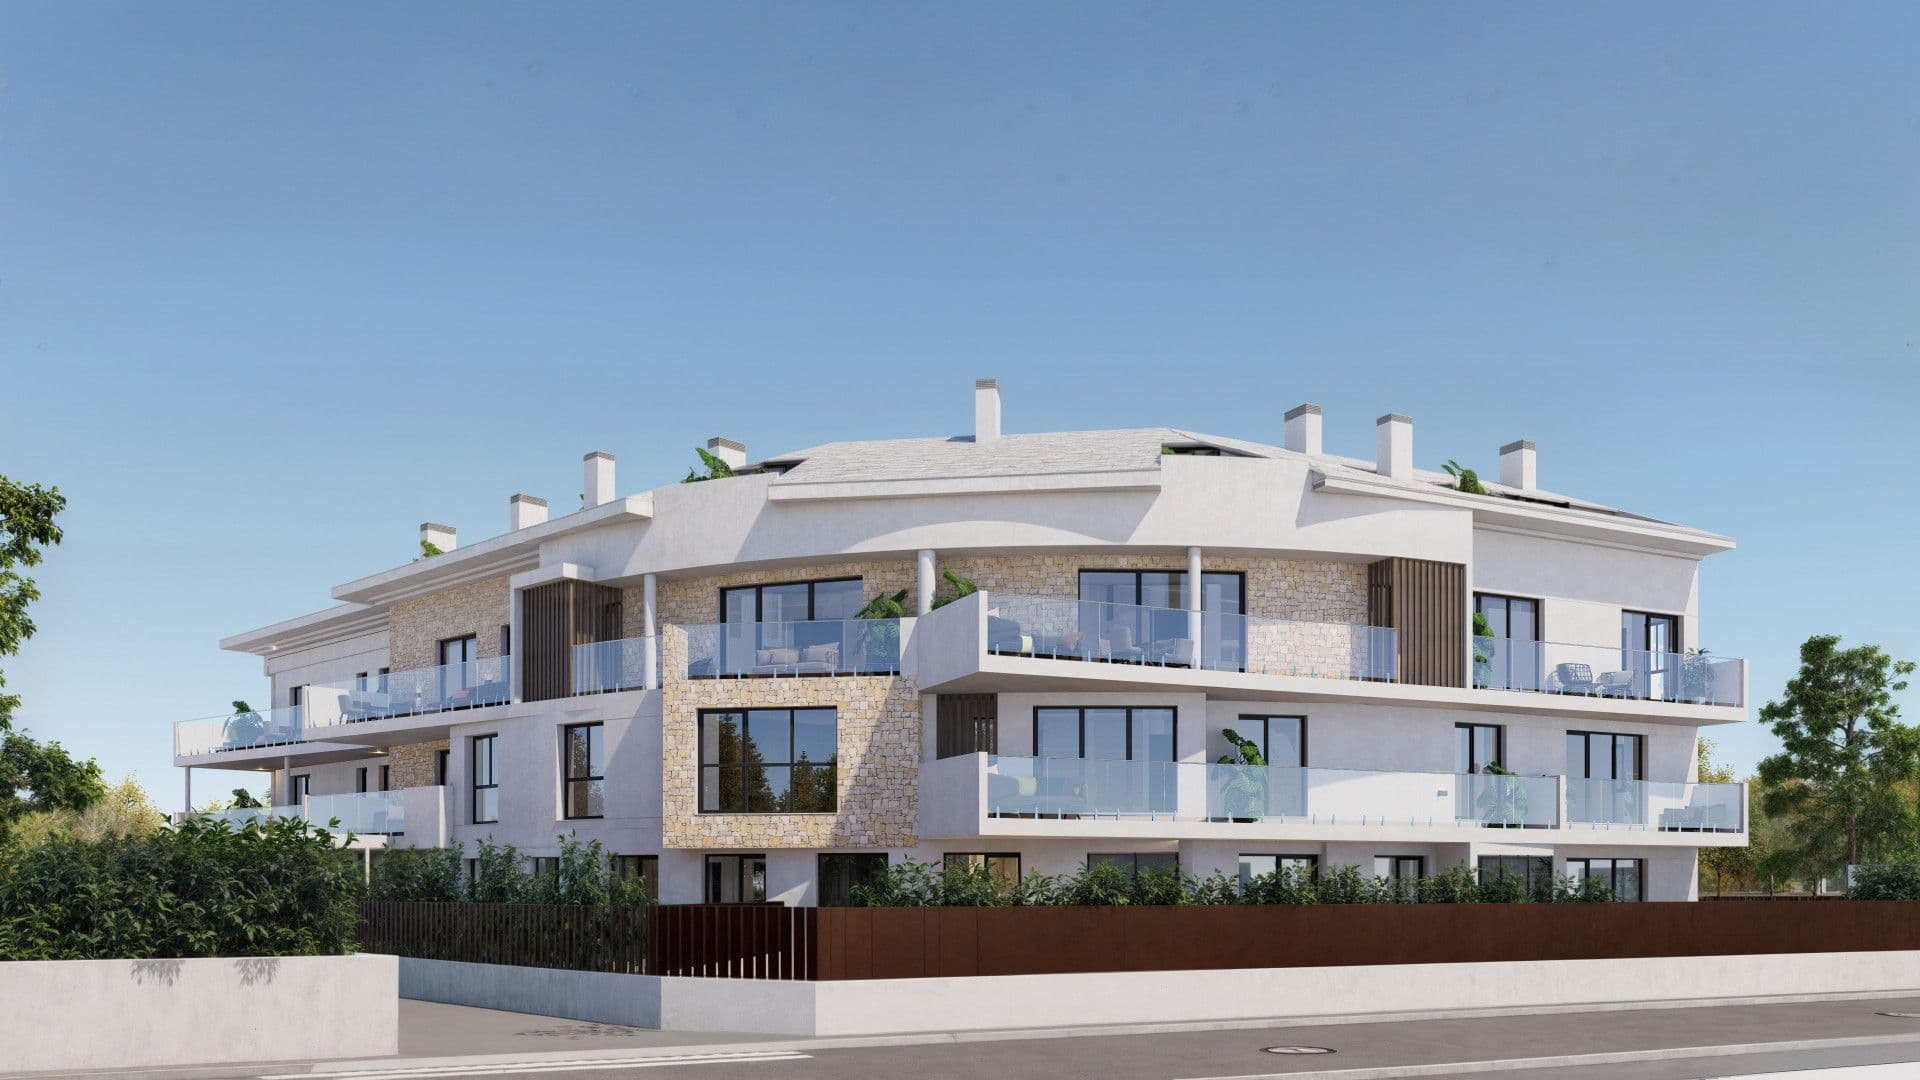 Newly built ground floor apartment in Cala Blanca, Jávea (Alicante)